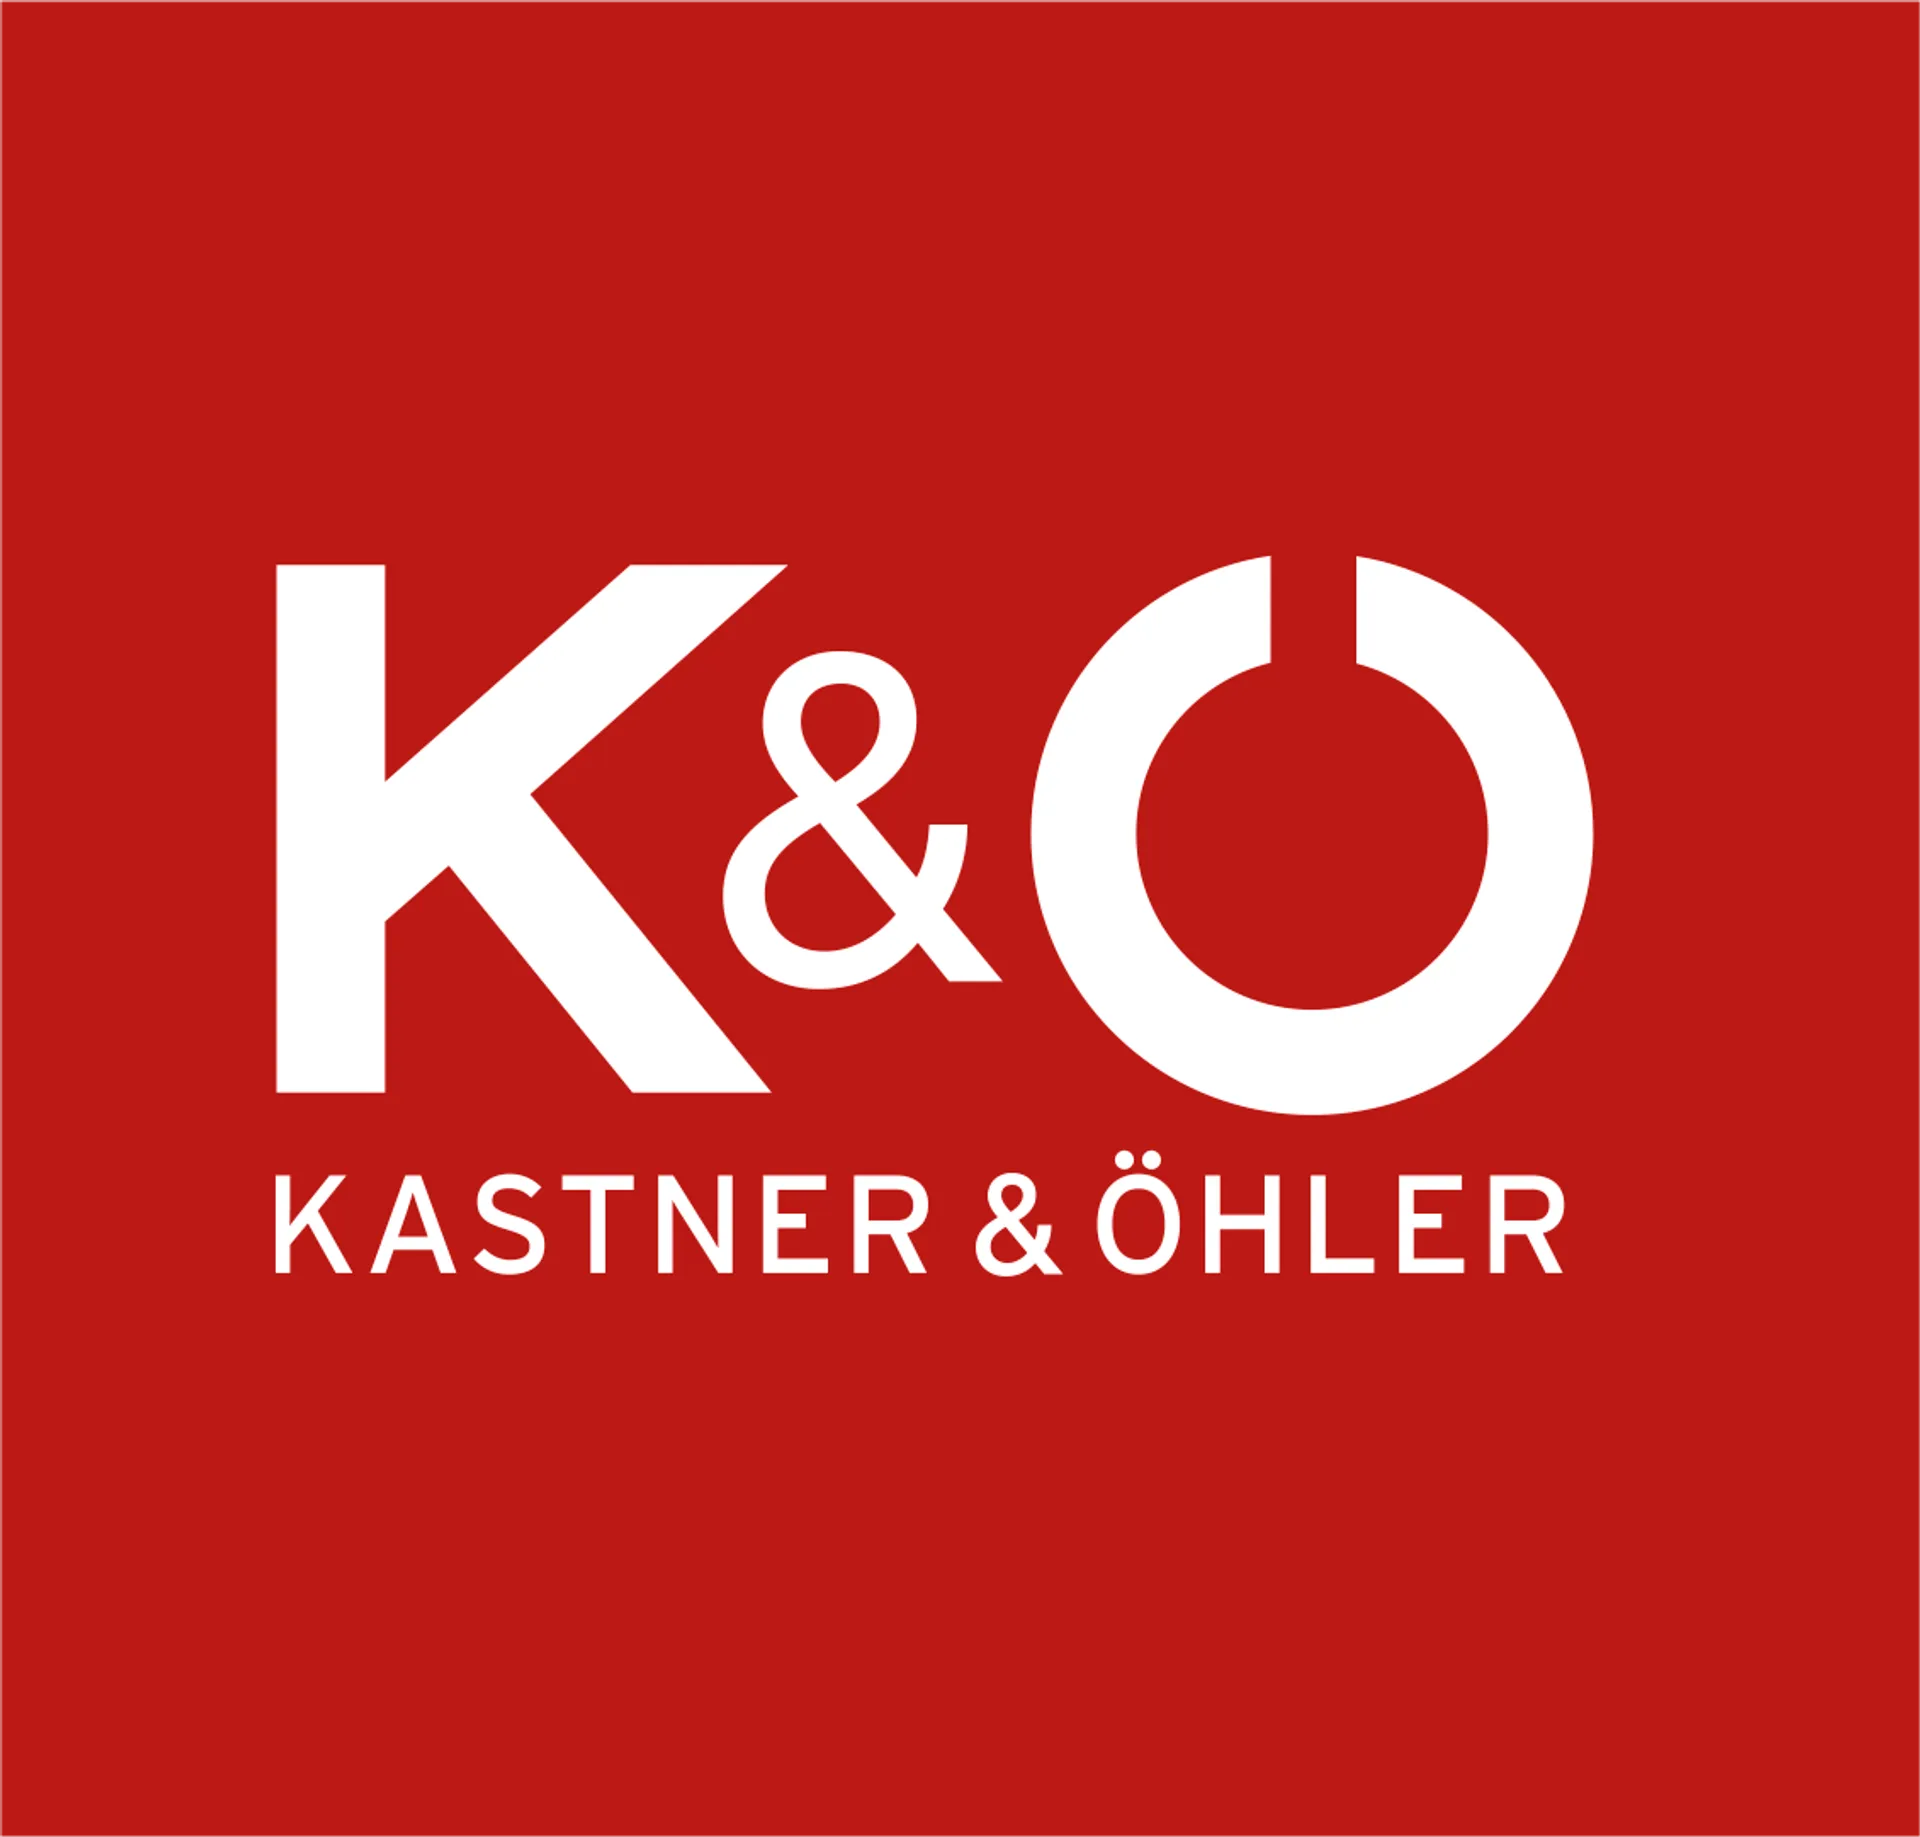 KASTNER & ÖHLER logo die aktuell Flugblatt